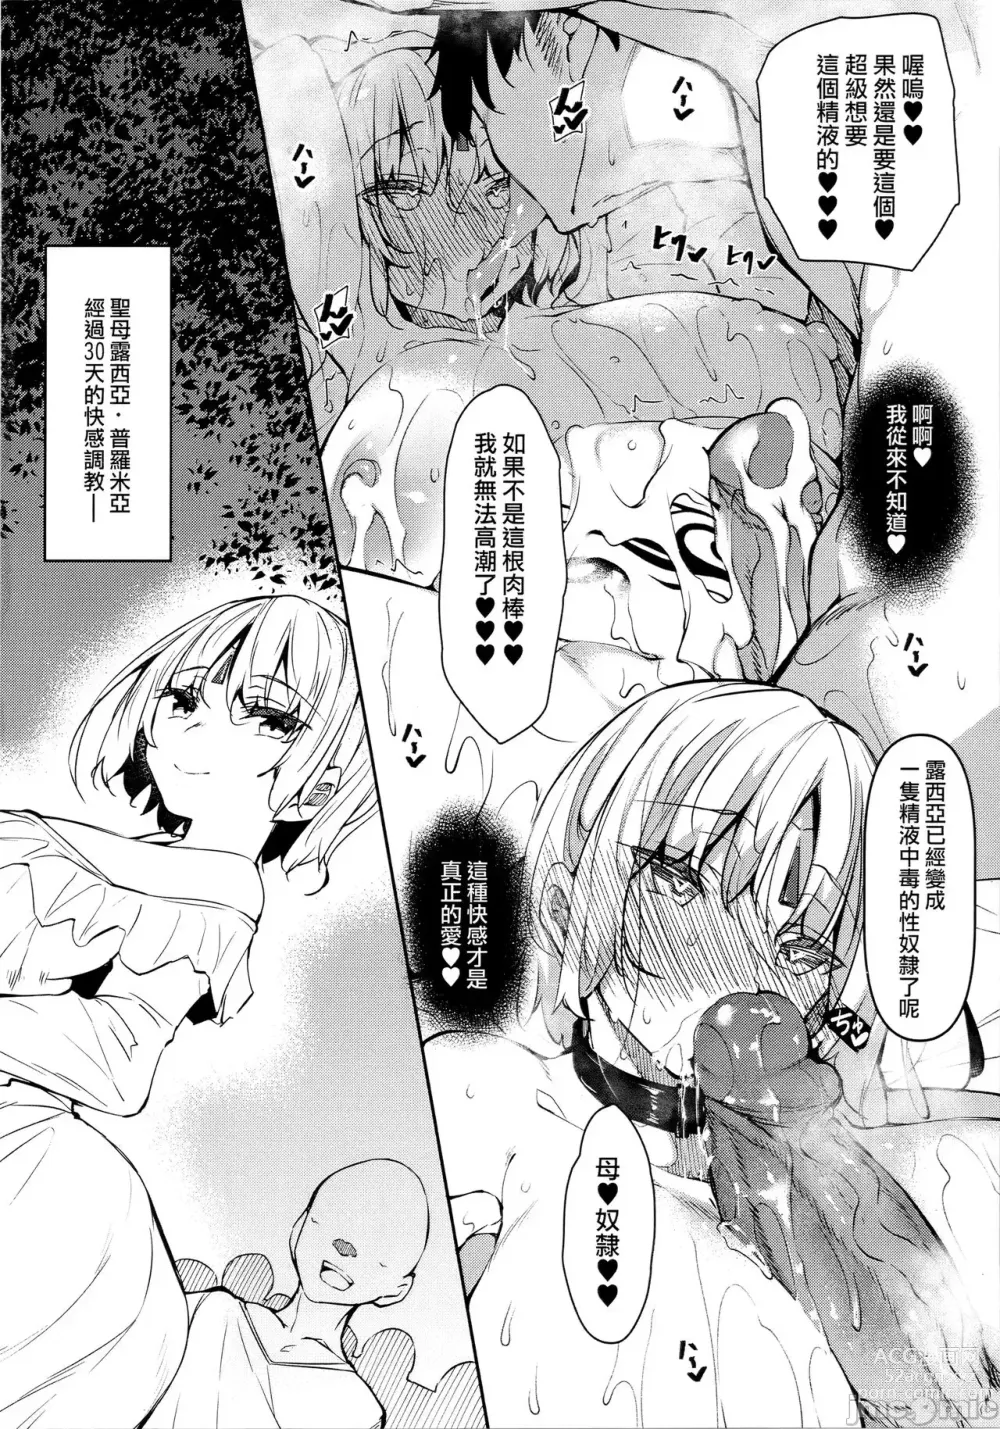 Page 150 of manga 俺 異世界で魔法使いになる 1-4